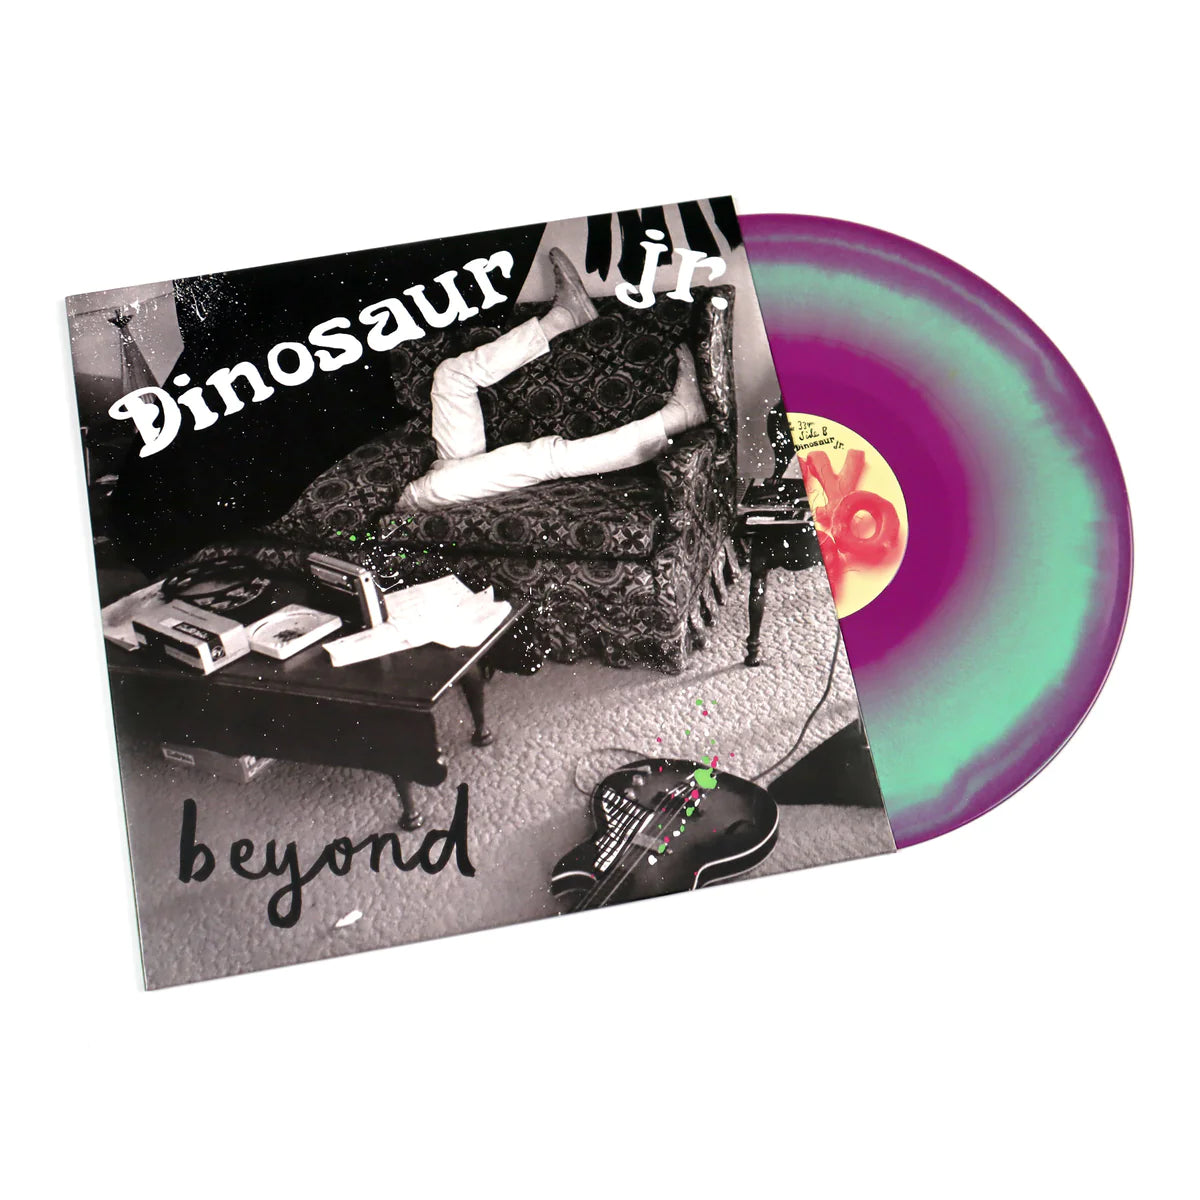 Dinosaur Jr. - Beyond "15th Anniversary Edition" (Limited Edition on Green + Purple Vinyl)